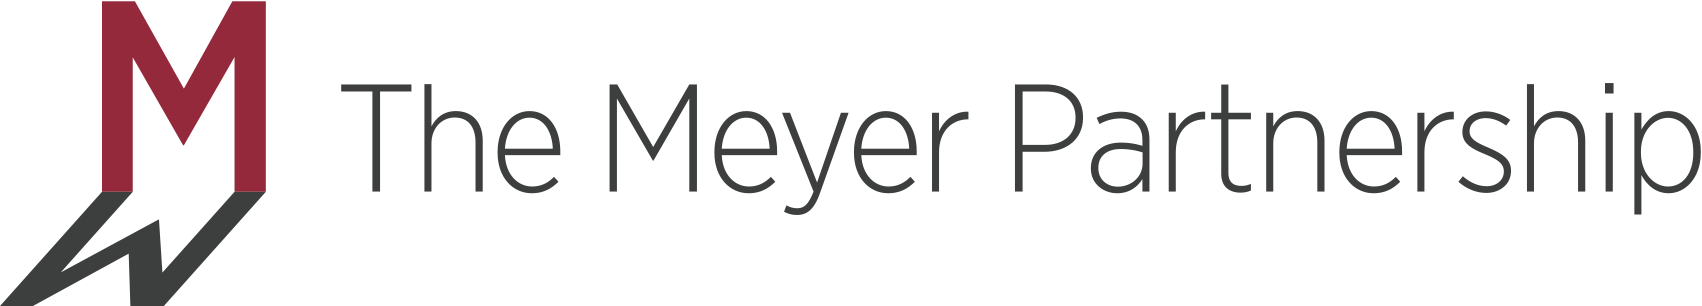 The Meyer Partnership